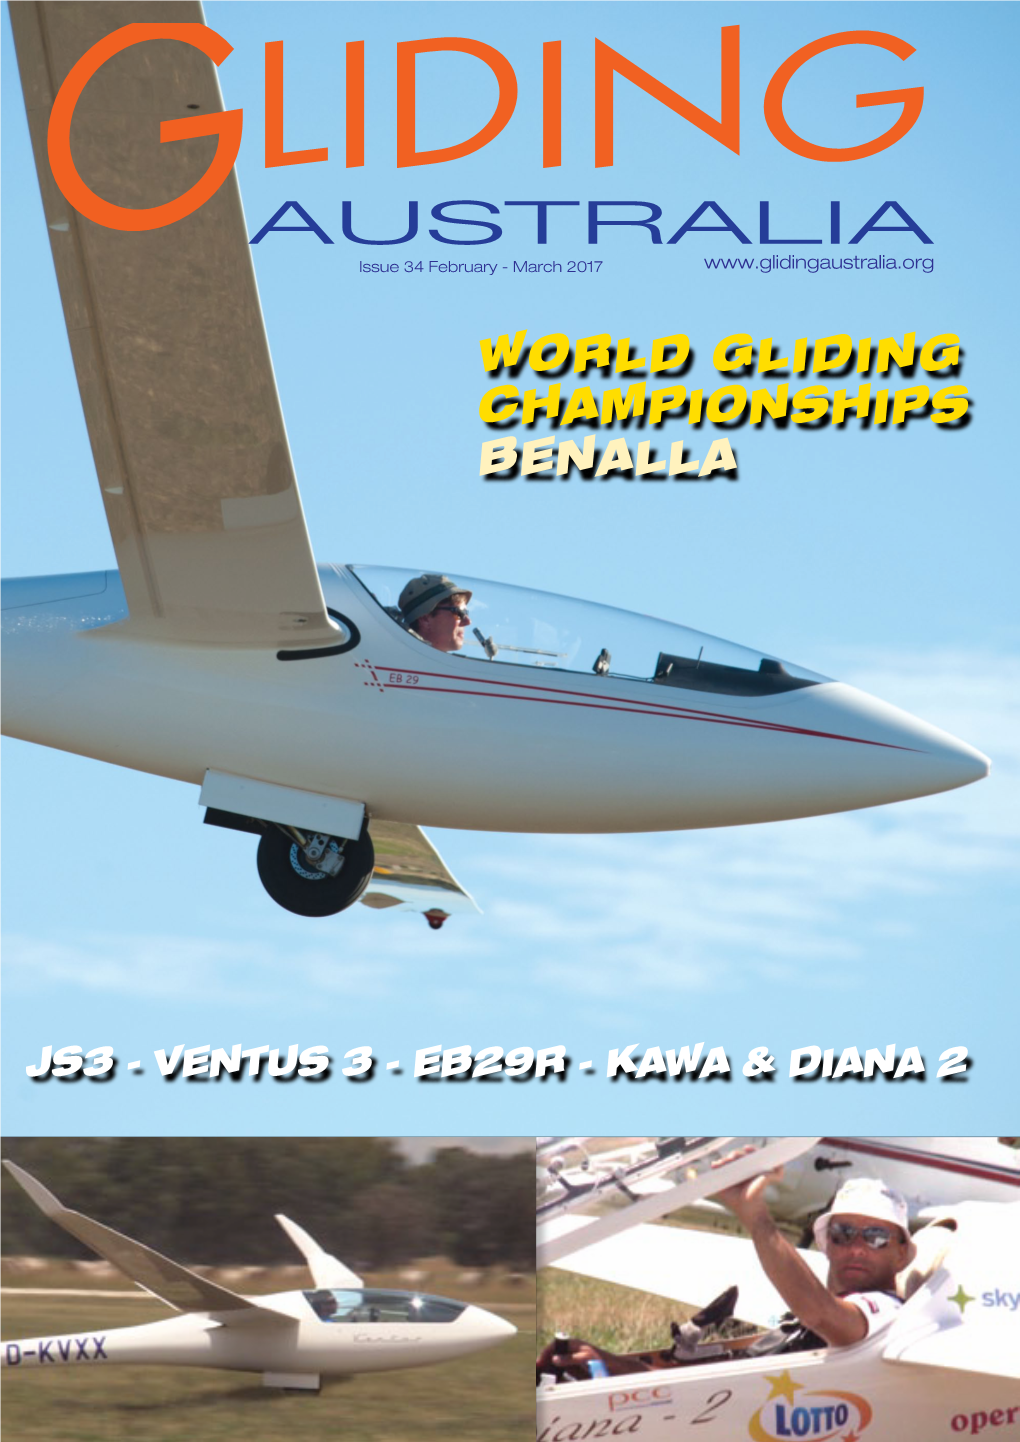 AUSTRALIA G Issue 34 February - March 2017 WORLD GLIDING CHAMPIONSHIPS BENALLA